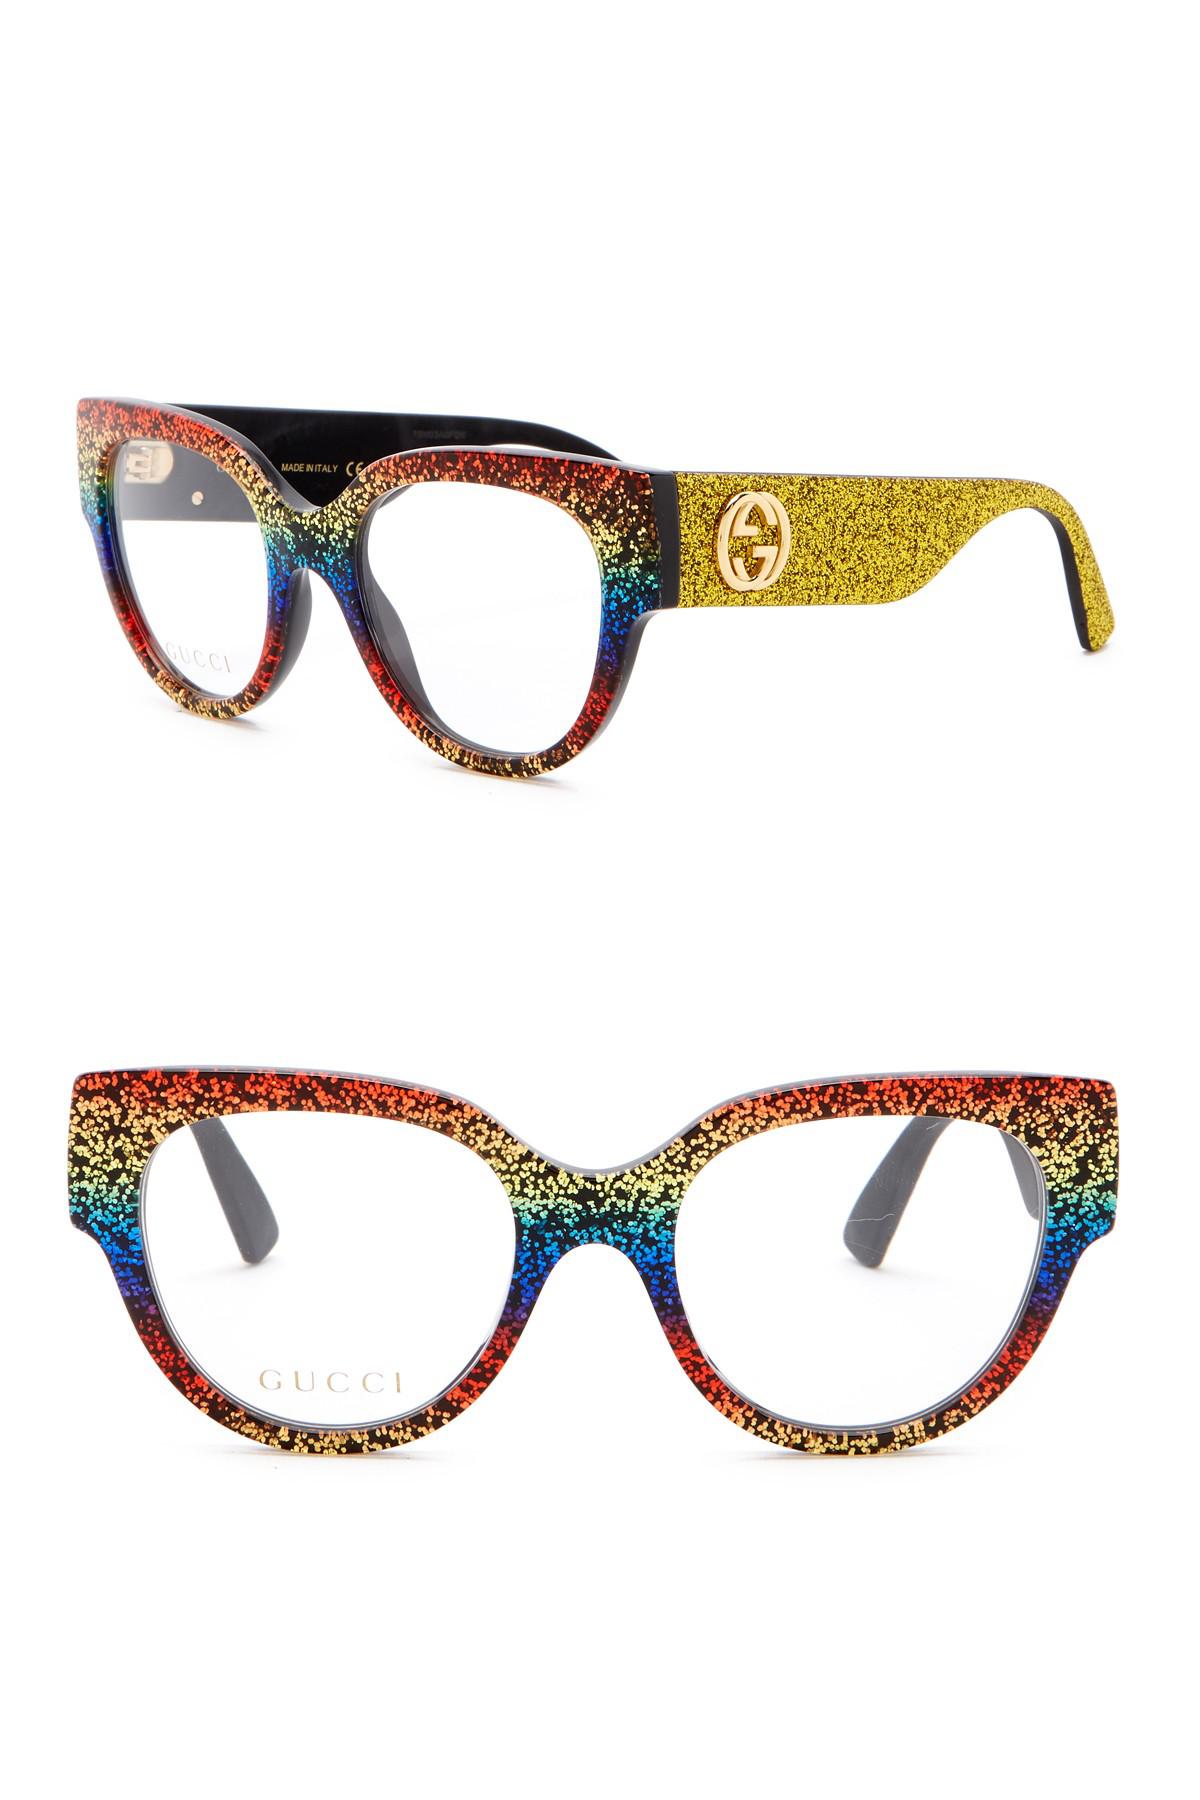 Madein square rainbow lens sunglasses